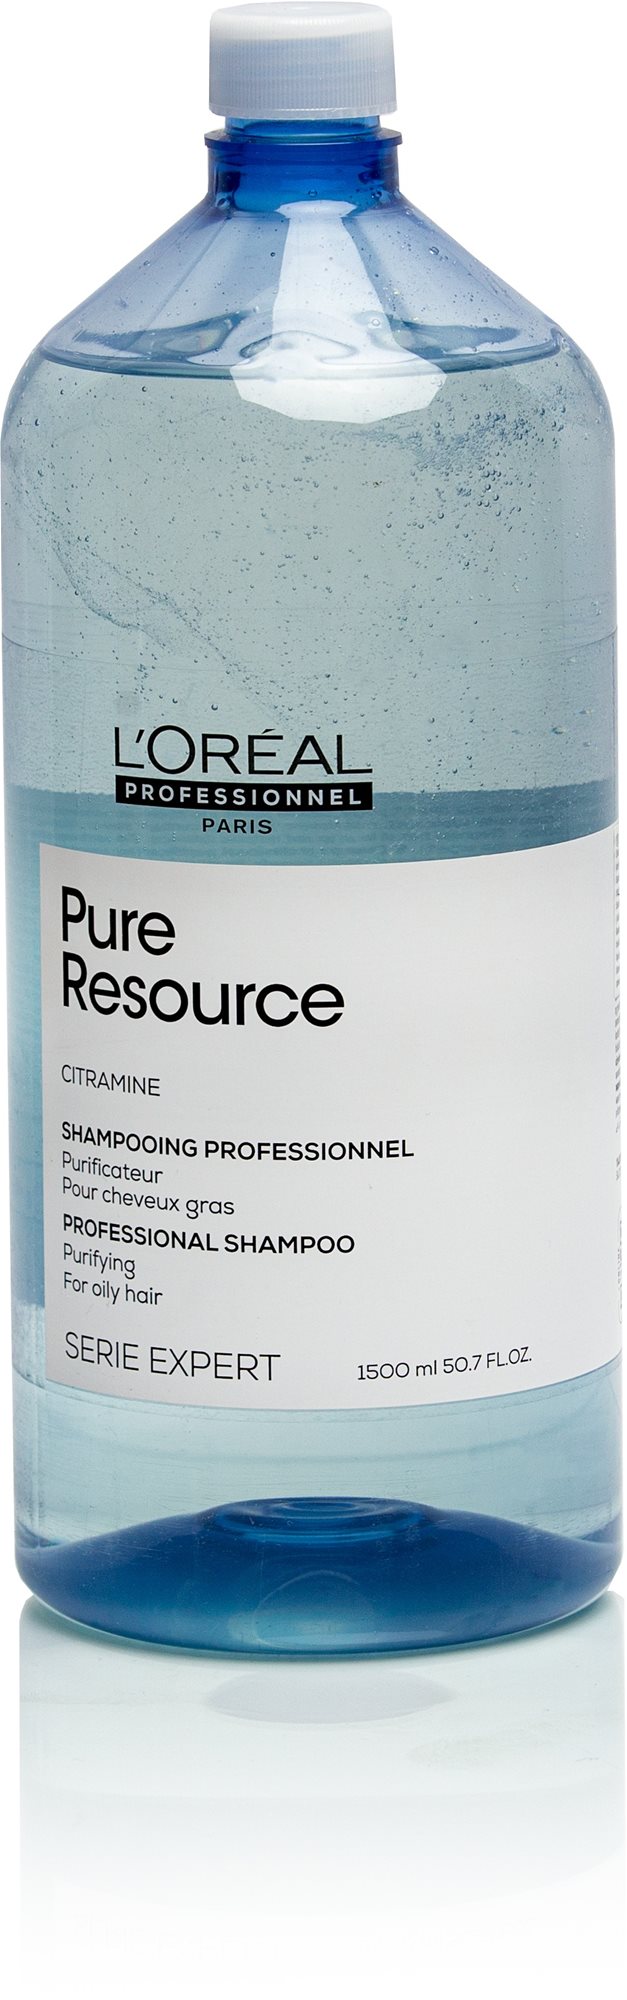 L'ORÉAL PROFESSIONNEL Serie Expert New Pure Resource 1500 ml